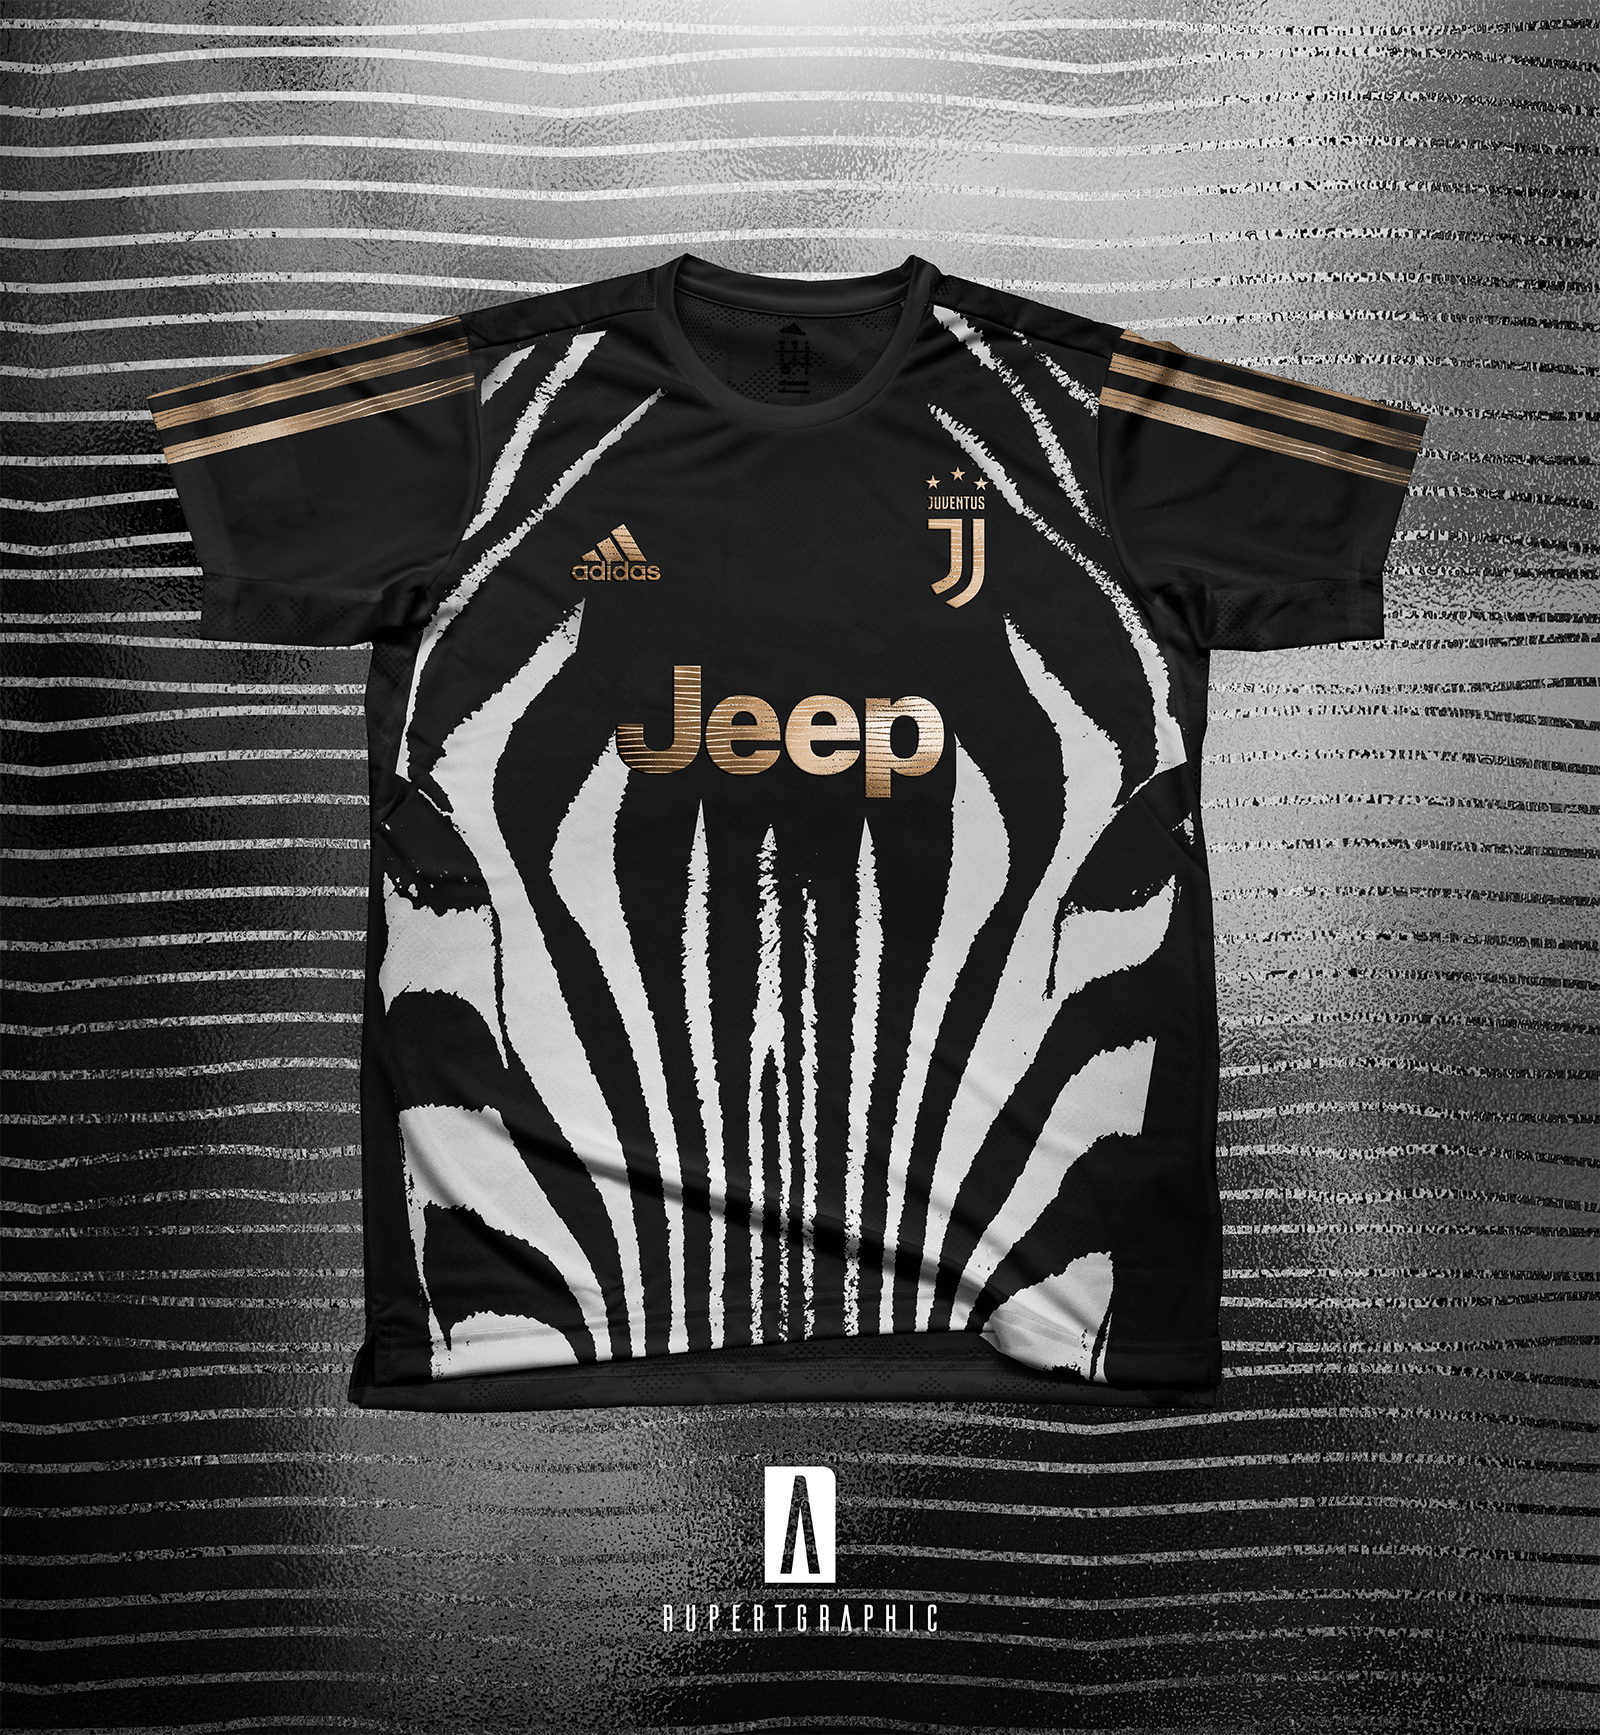 alberto mariani - Juventus Concept 2018/19 - Adidas